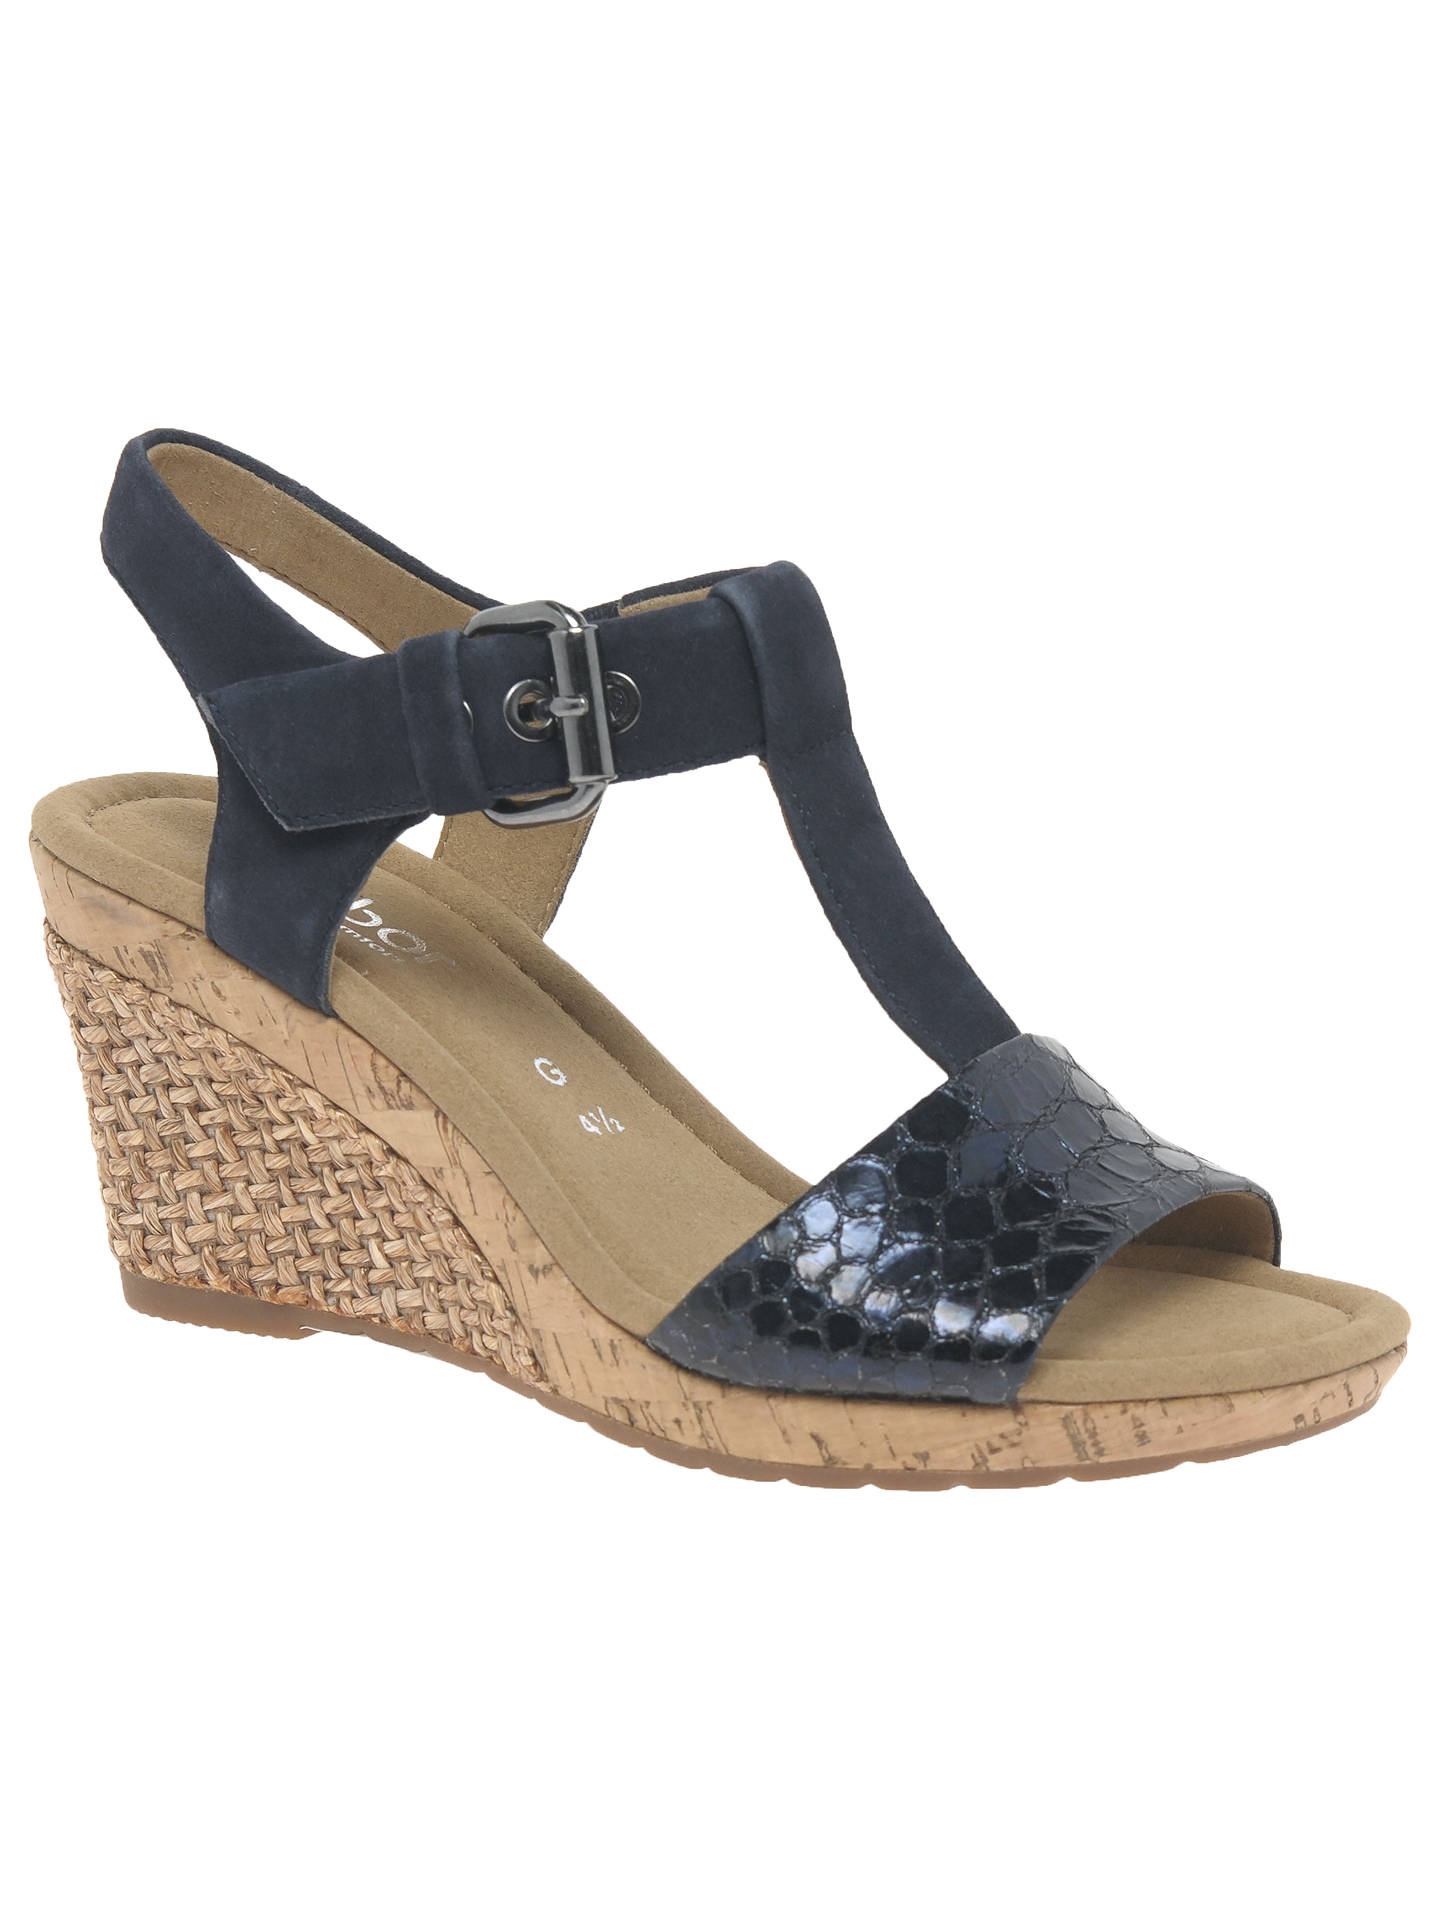 Gabor Karen Wide Fit Wedge Heeled Sandals, Ocean at John Lewis & Partners